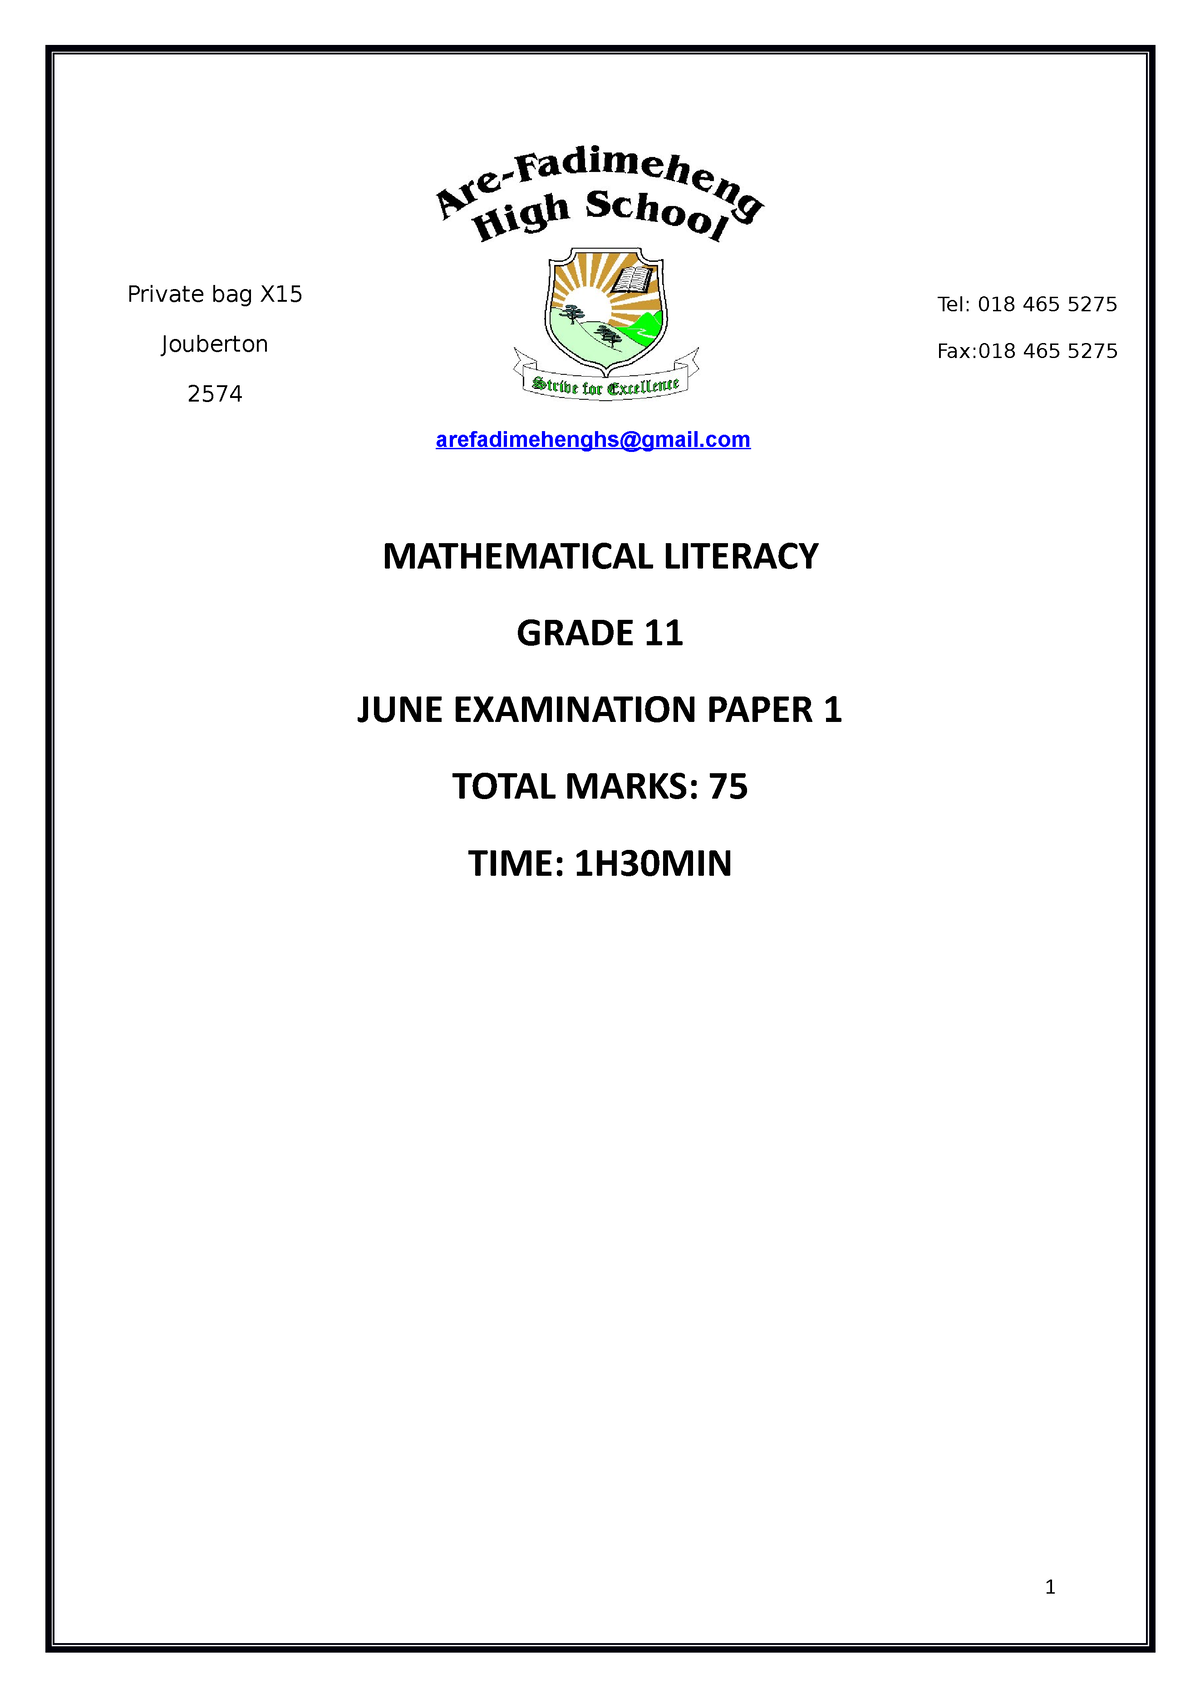 mathematical literacy grade 11 term 3 assignment memo